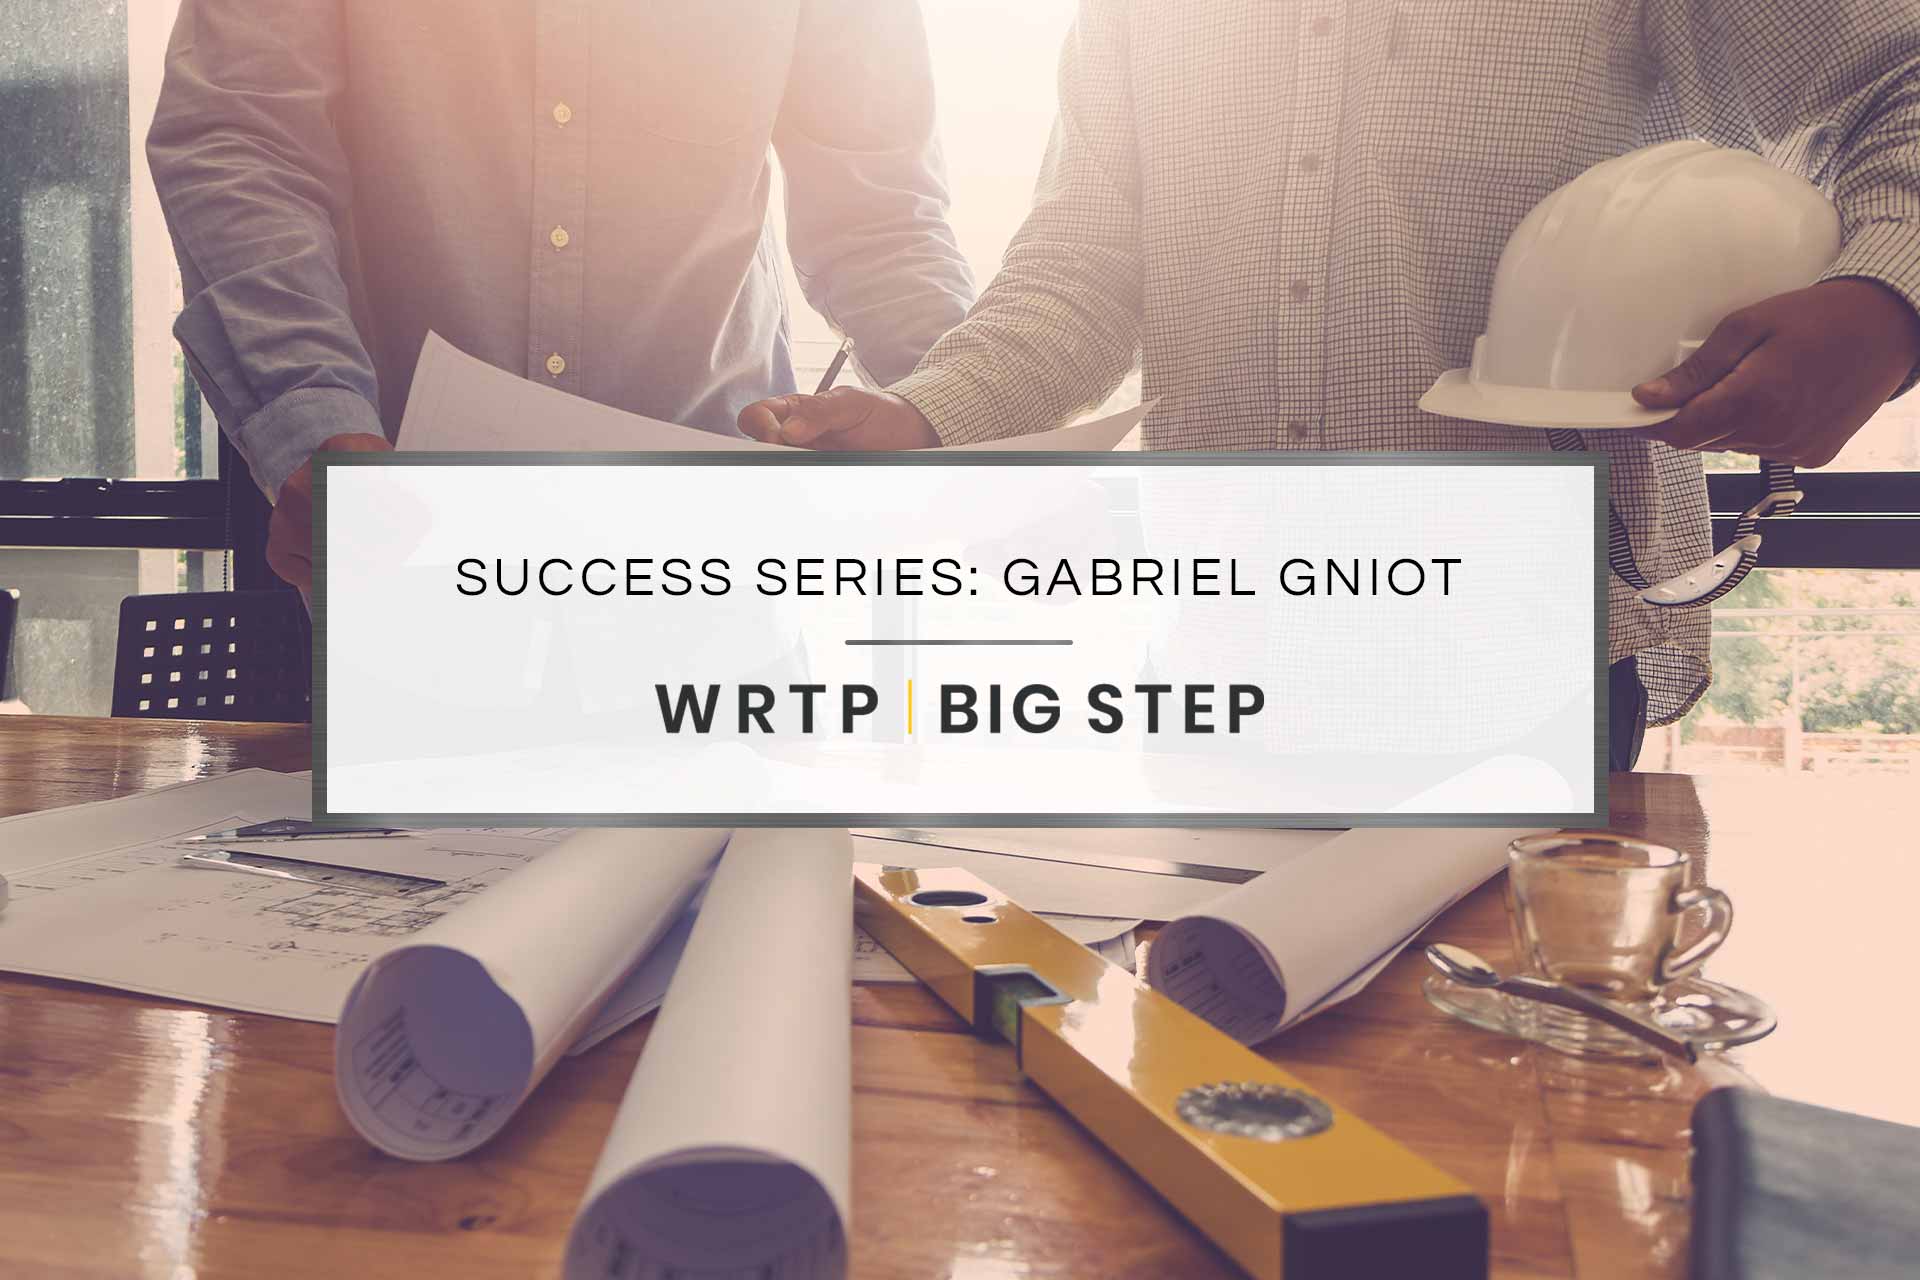 WRTP | BIG STEP Success Series: Gabriel Gniot's Success Story